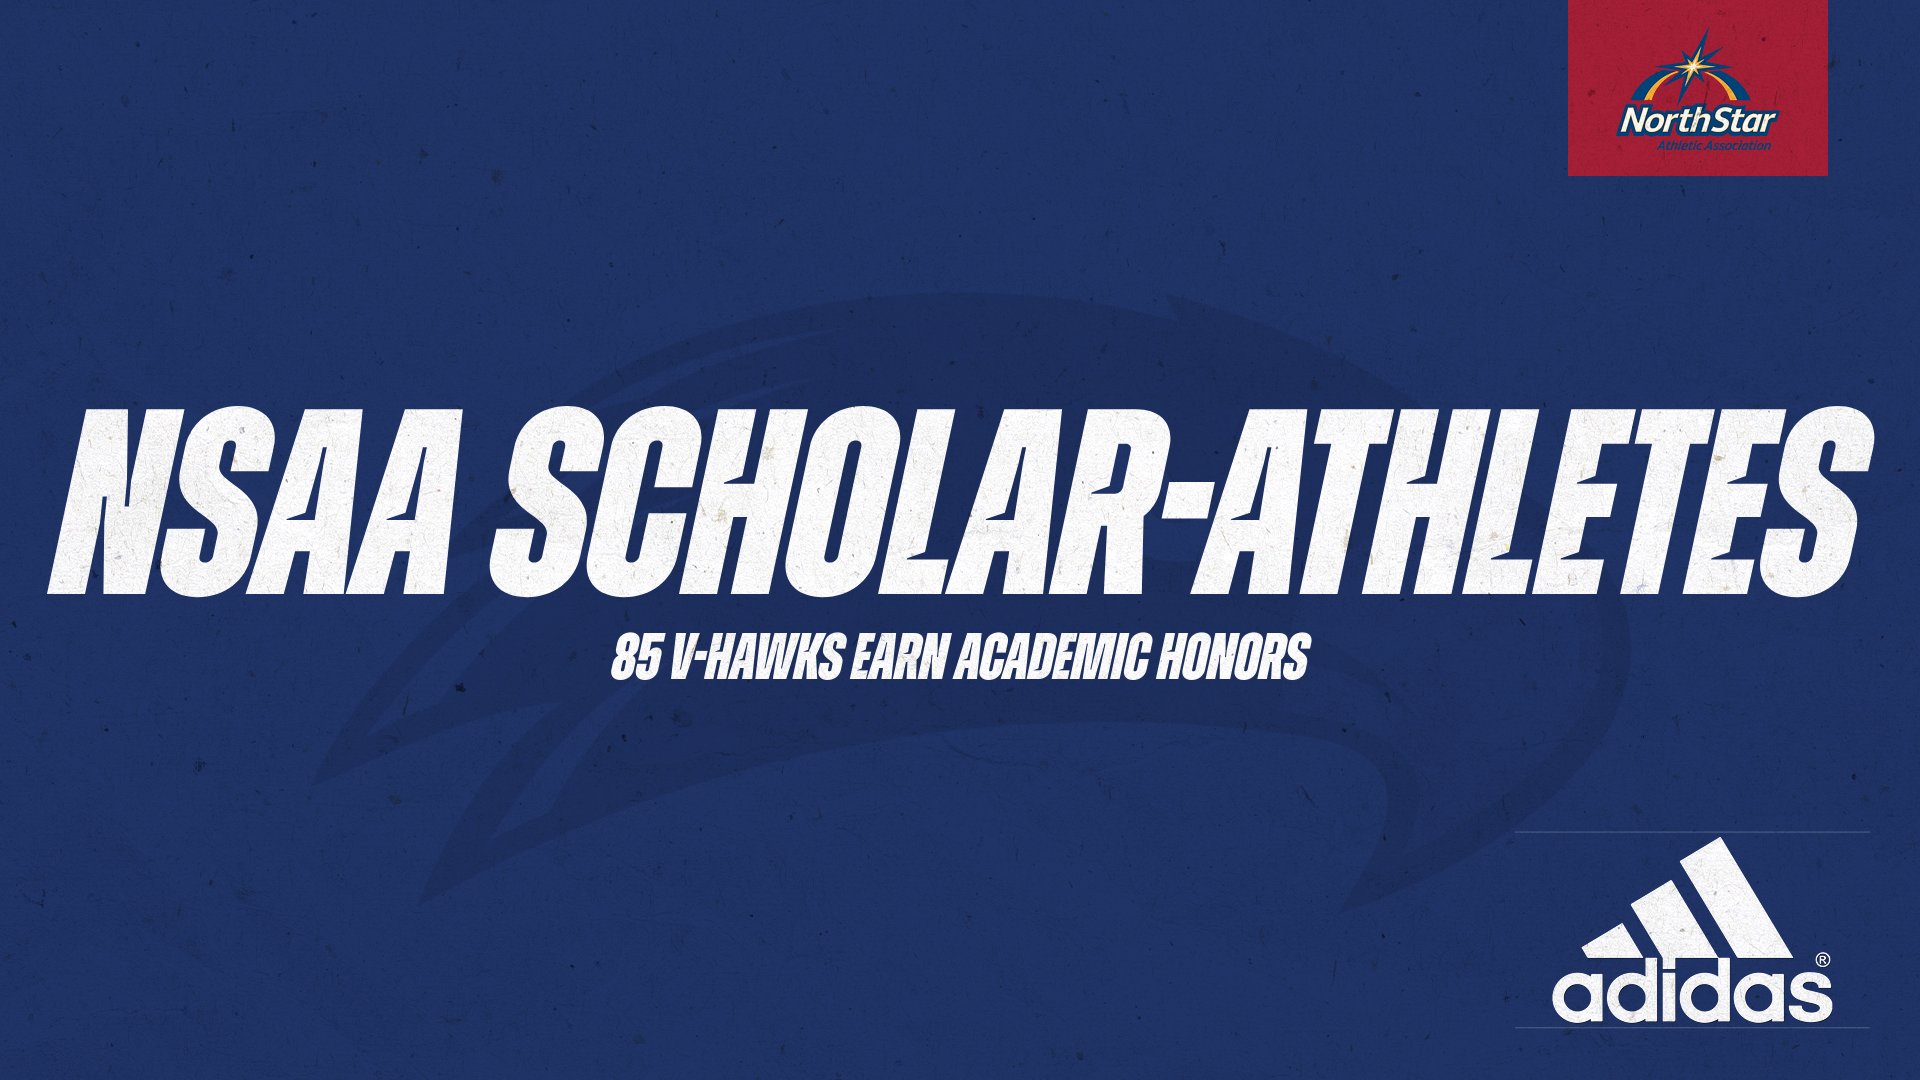 85 V-Hawks Named NSAA Scholar-Athletes